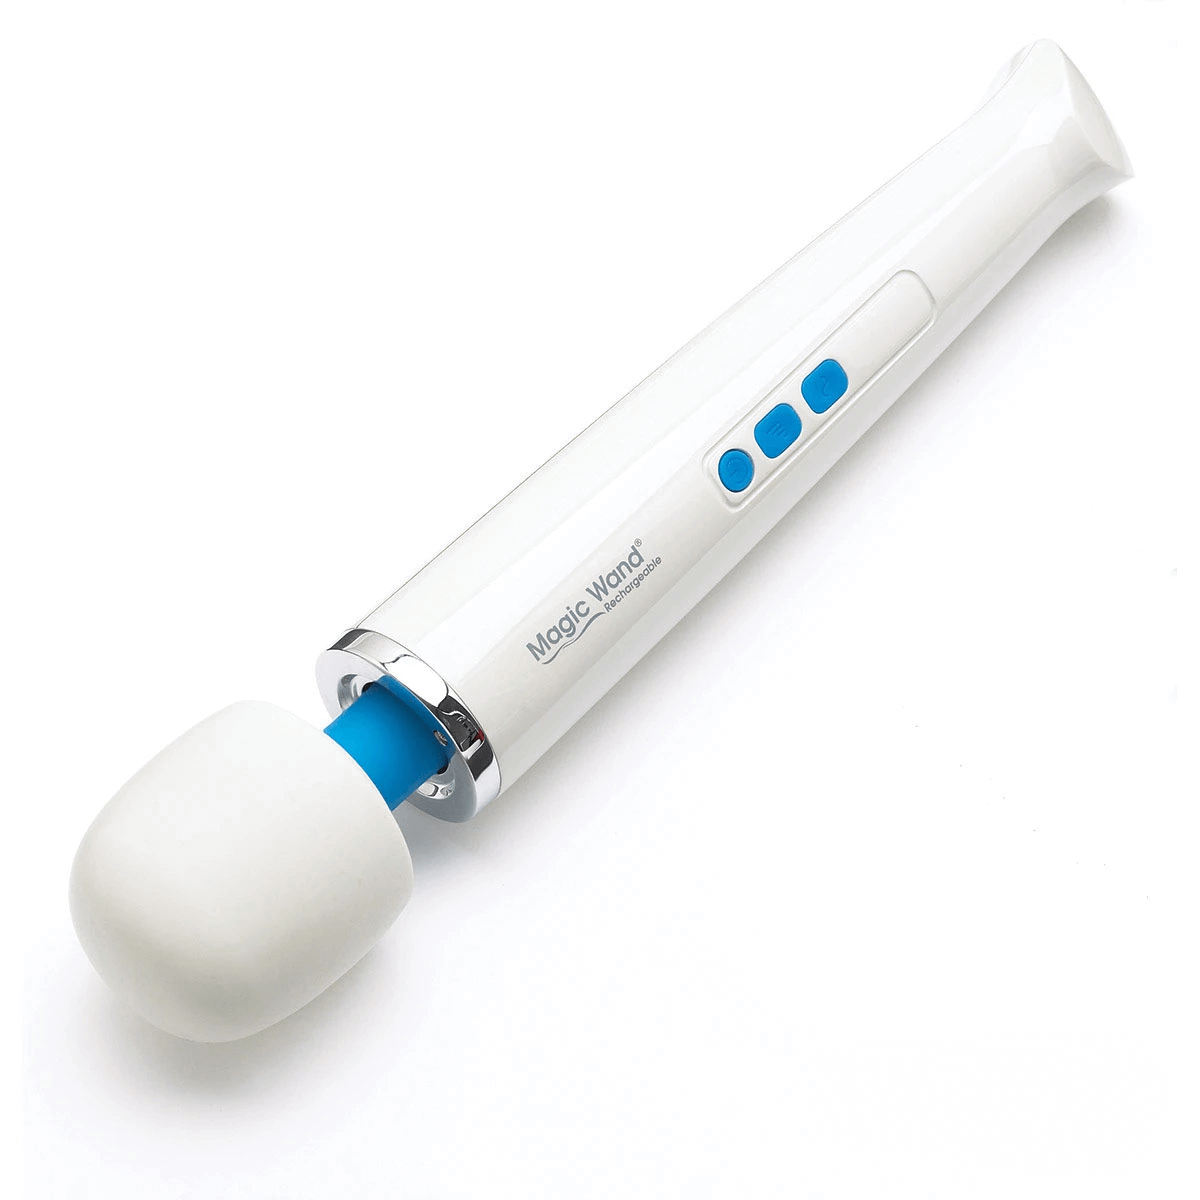 Vibratex Magic Wand - Rechargeable vibrator